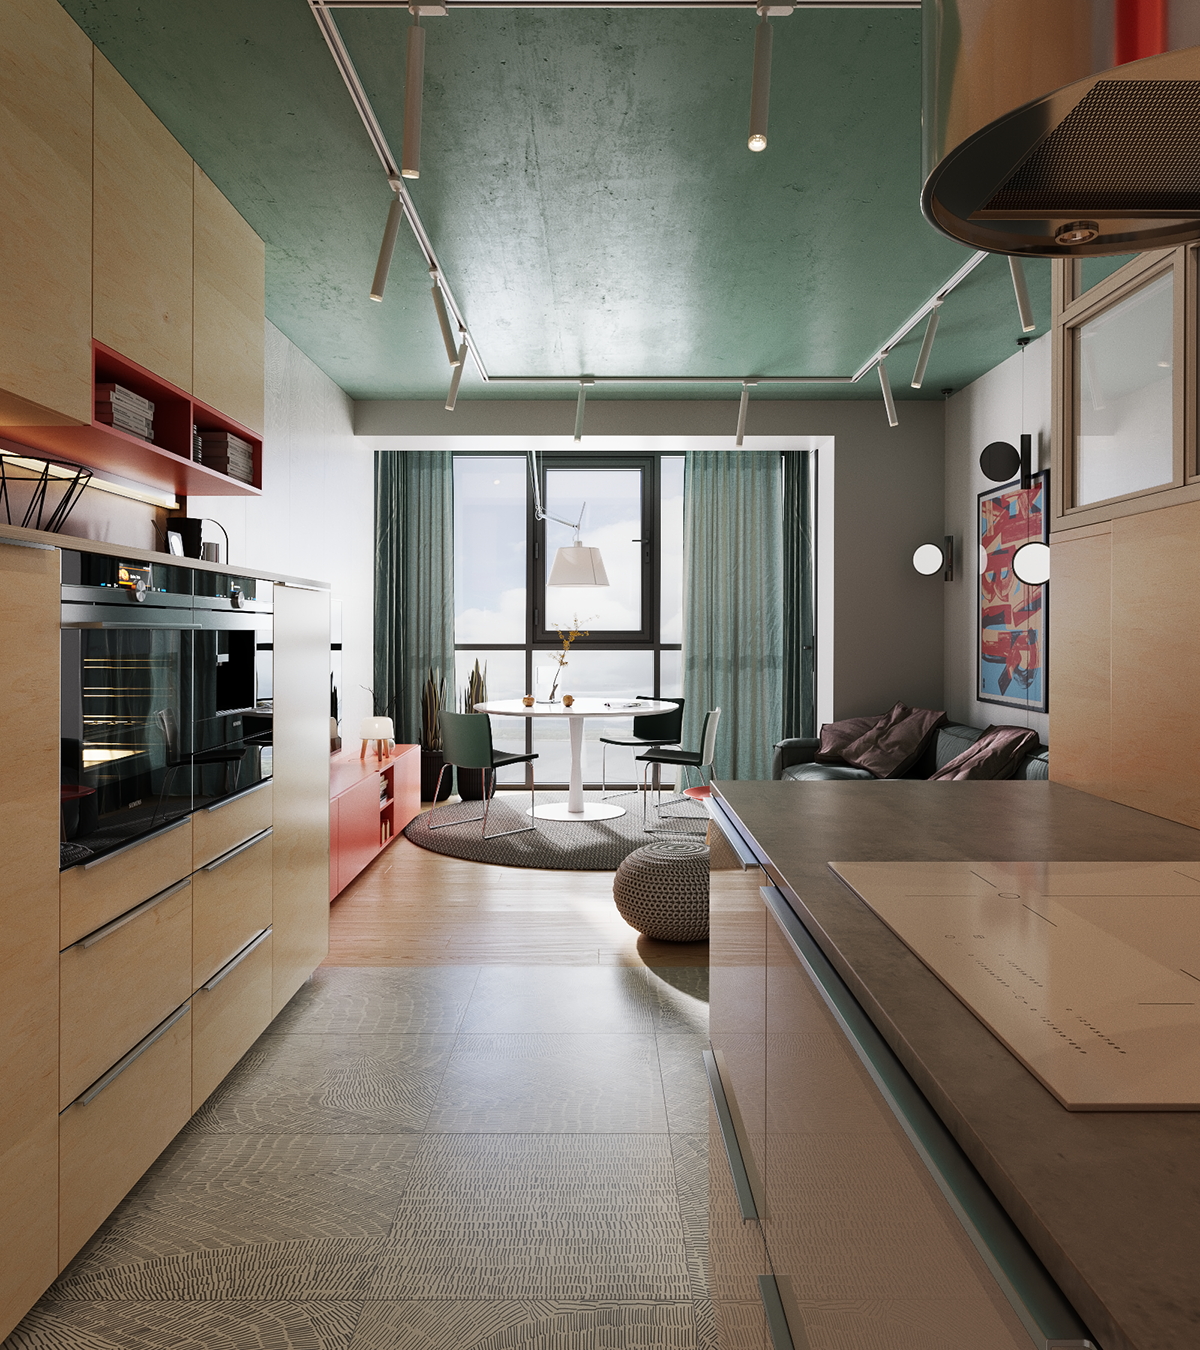 Interior coronarenderer CGI kitchen appartment modern